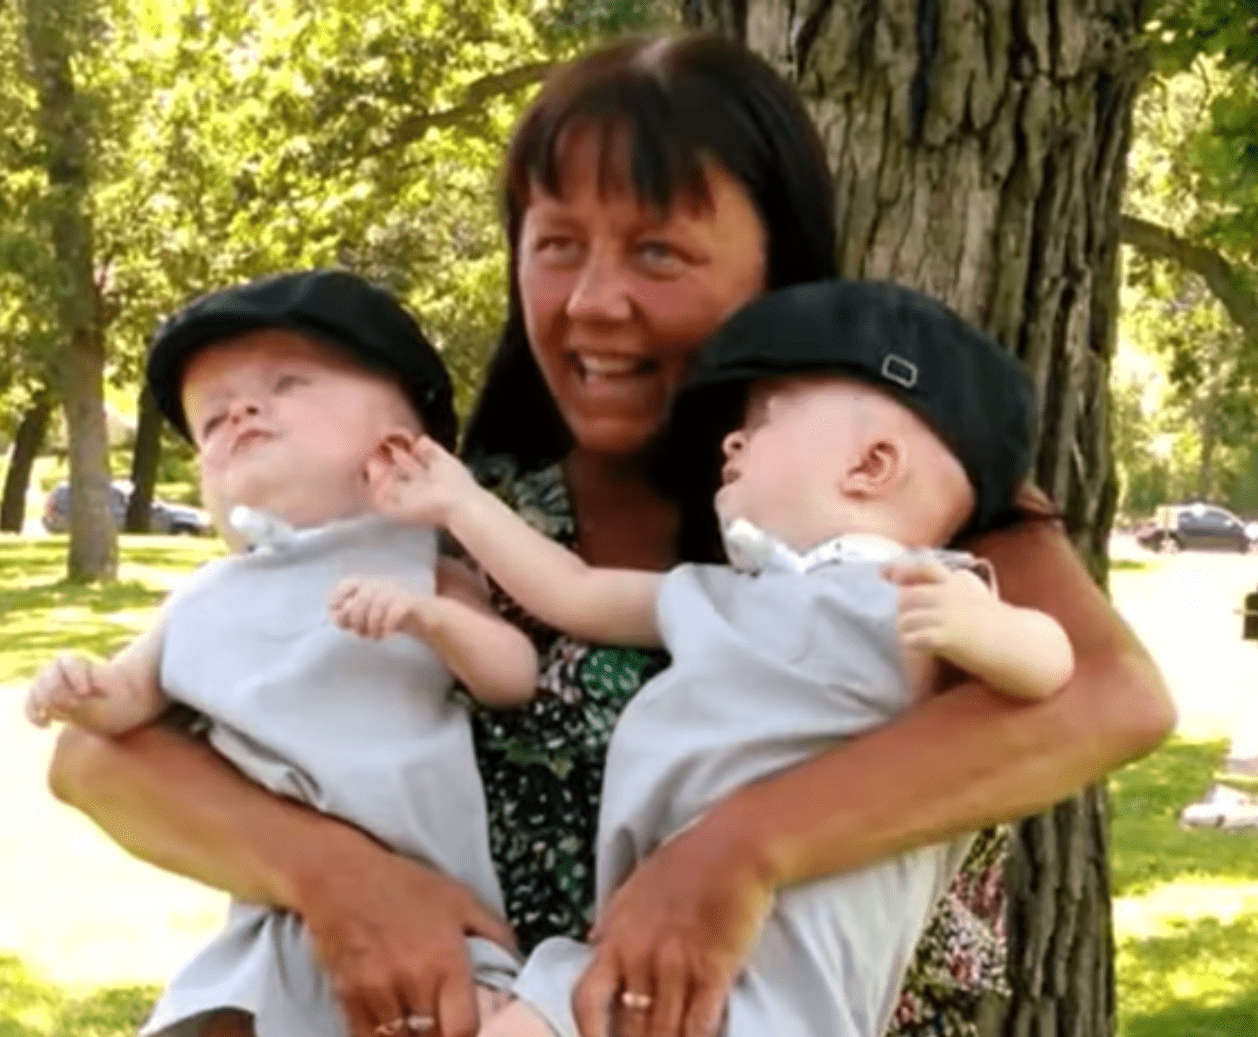 Linda Trepanier avec les jumeaux de 3 ans, Matthew et Marshall Trepanier. │Source : youtube.com/Inside Edition